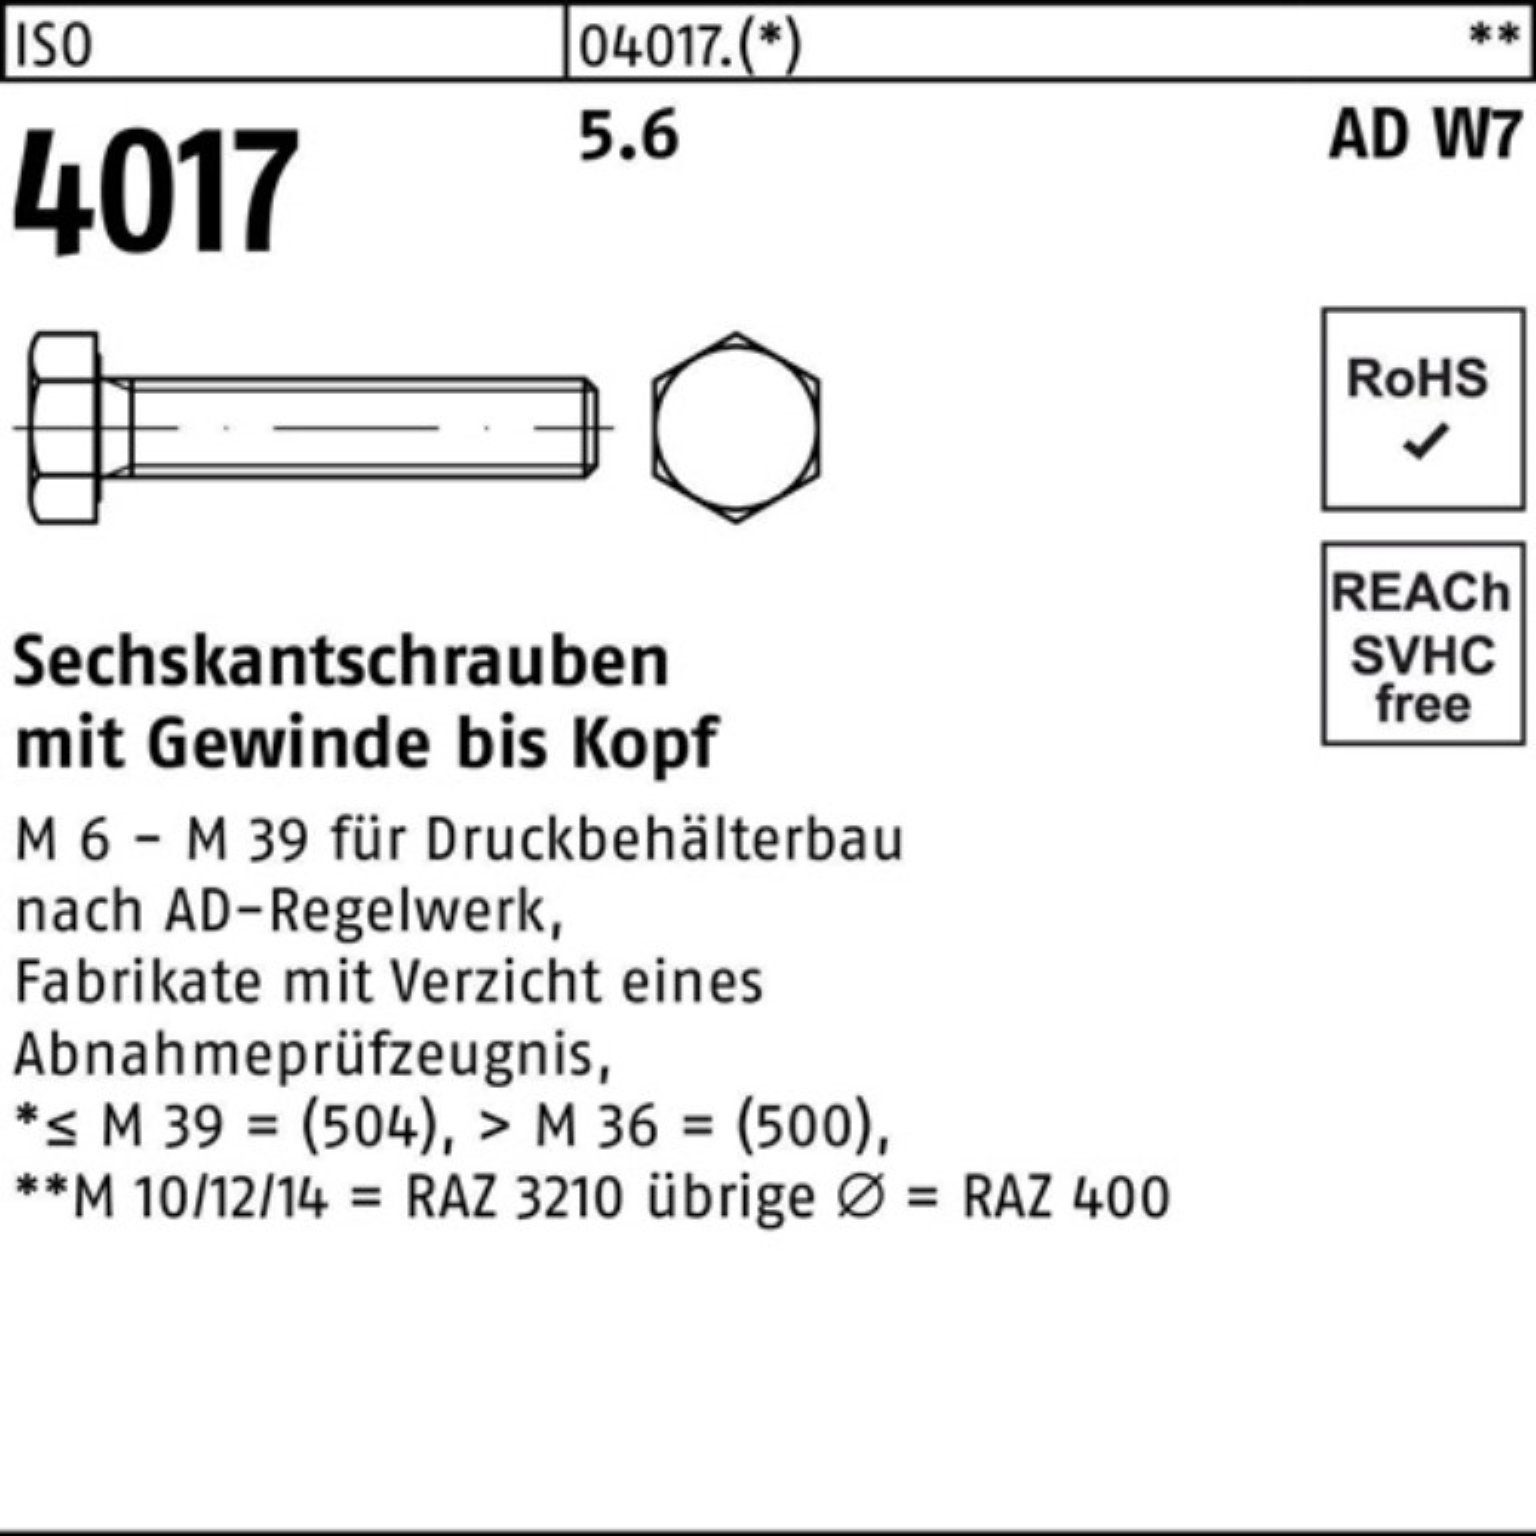 Bufab Sechskantschraube 100er Pack 50 W7 VG Stück AD 4017 5.6 M10x ISO 100 Sechskantschraube